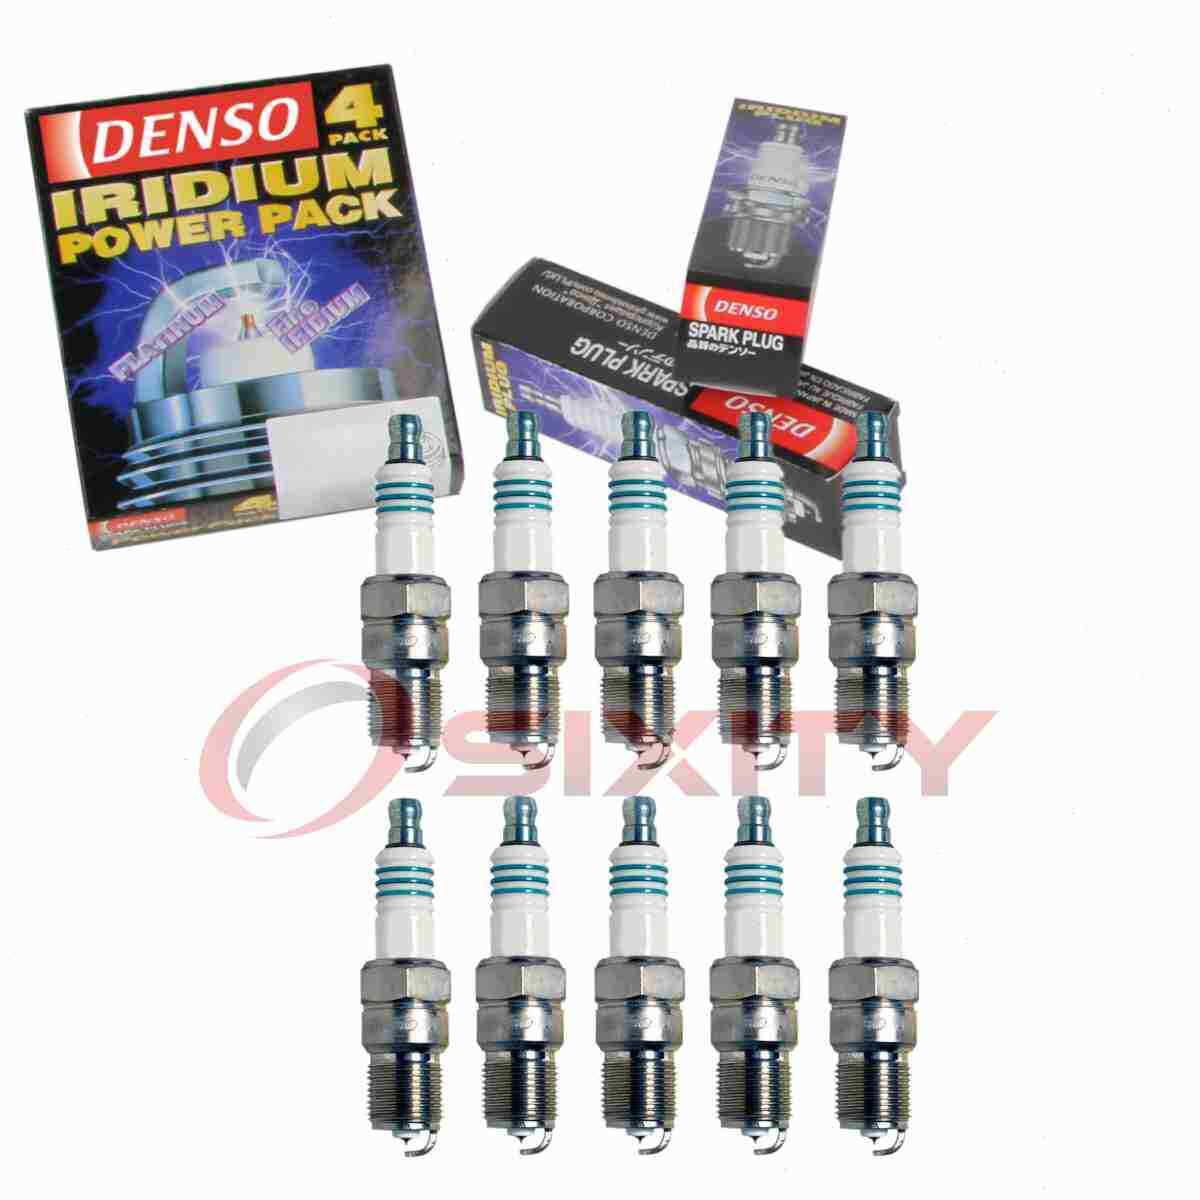 10 pc Denso Iridium Power Spark Plugs for 1999-2004 Ford F-450 Super Duty do